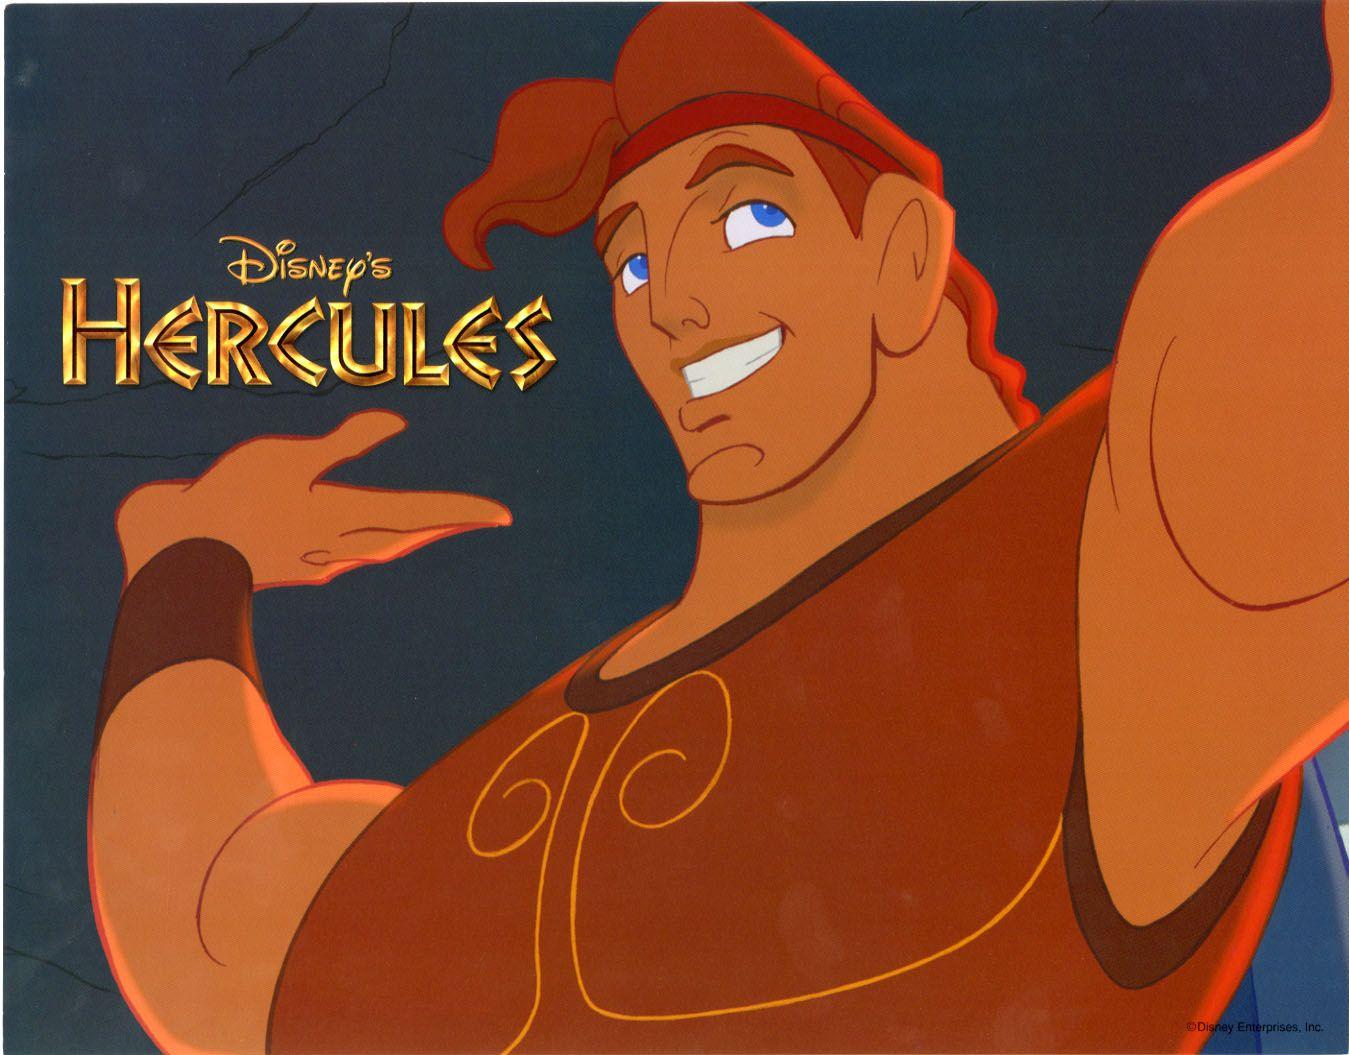 Disney Hercules Movie HD Wallpaper Image for PC